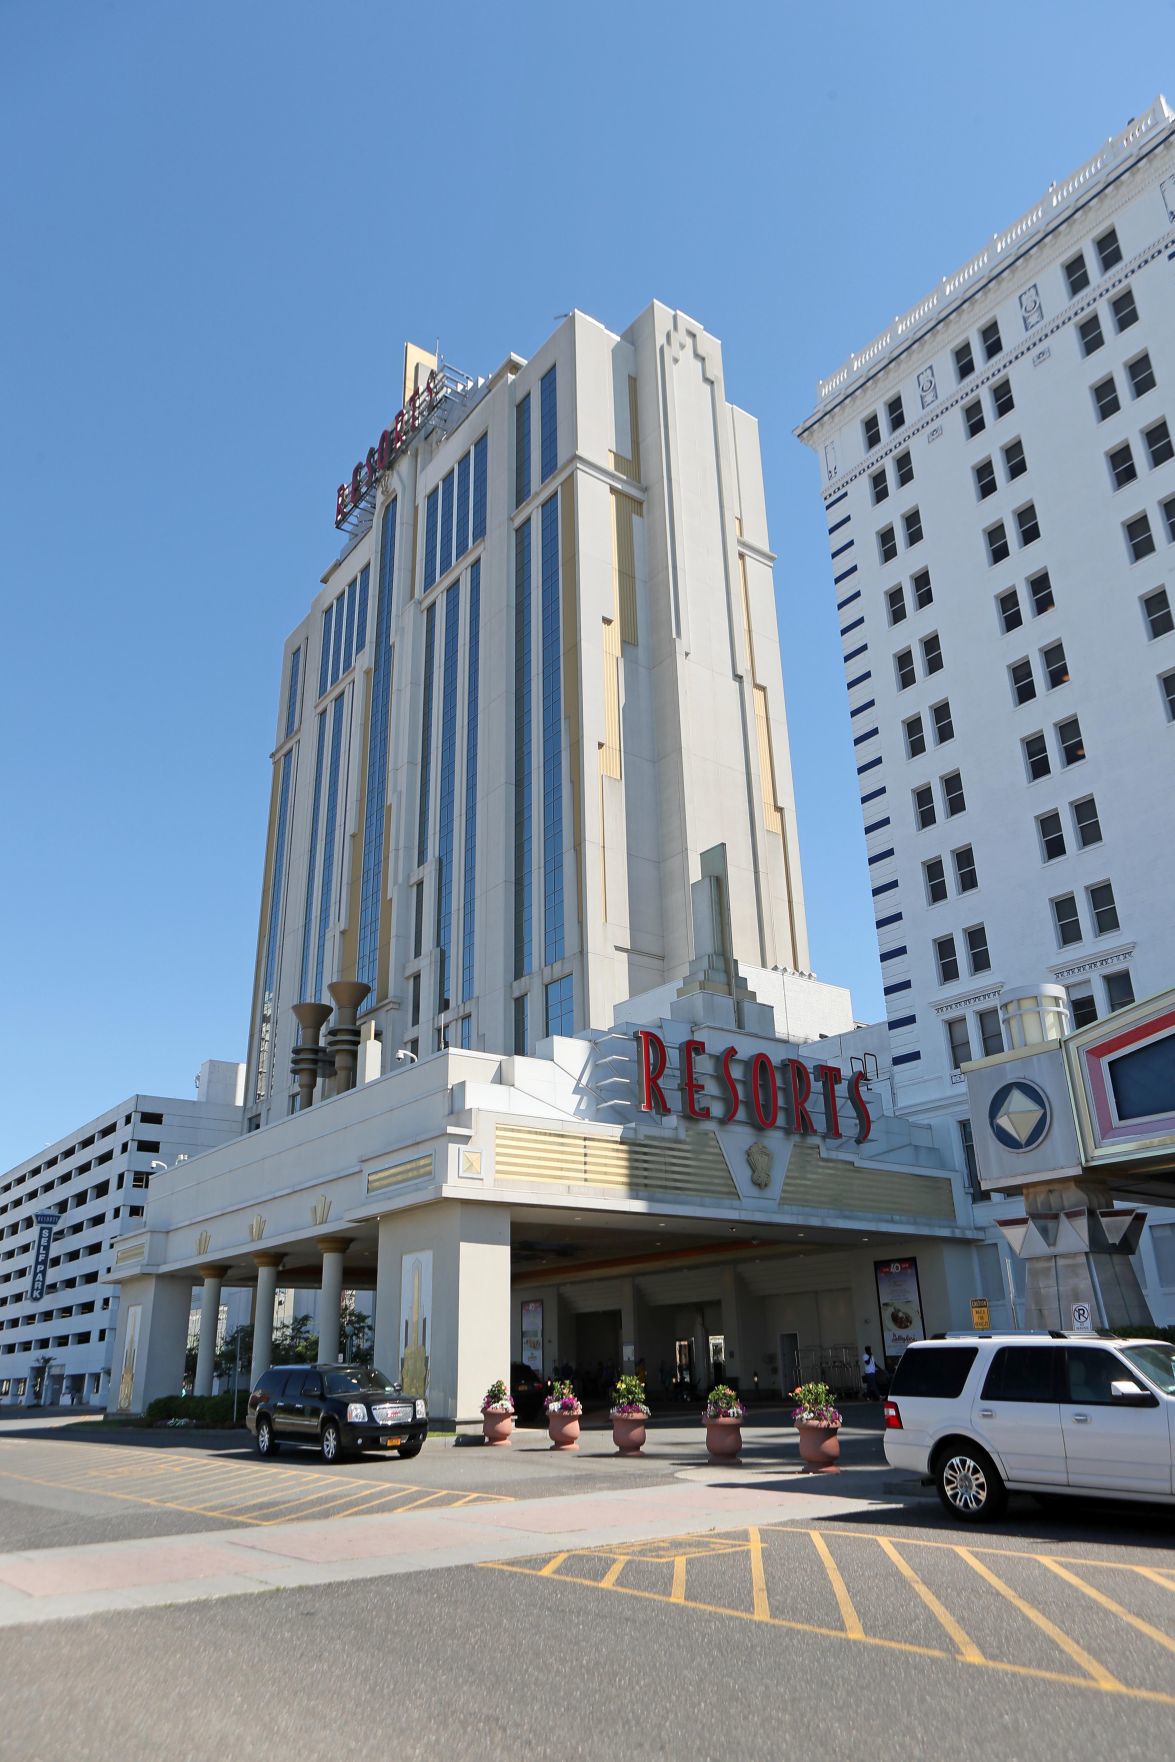 is resorts casino in atlantic city closing